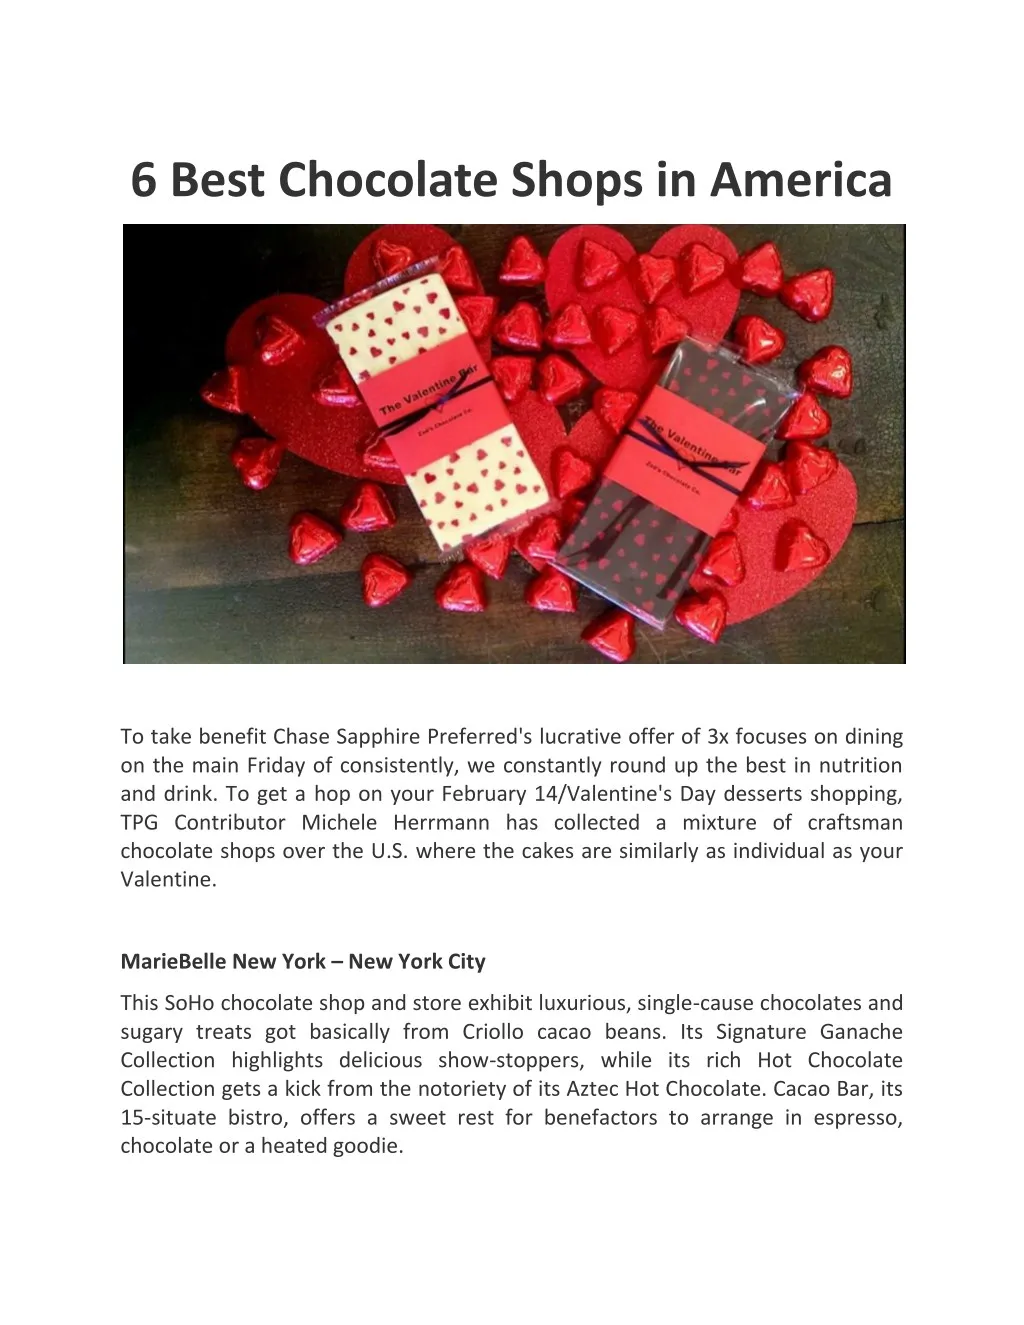 6 best chocolate shops in america